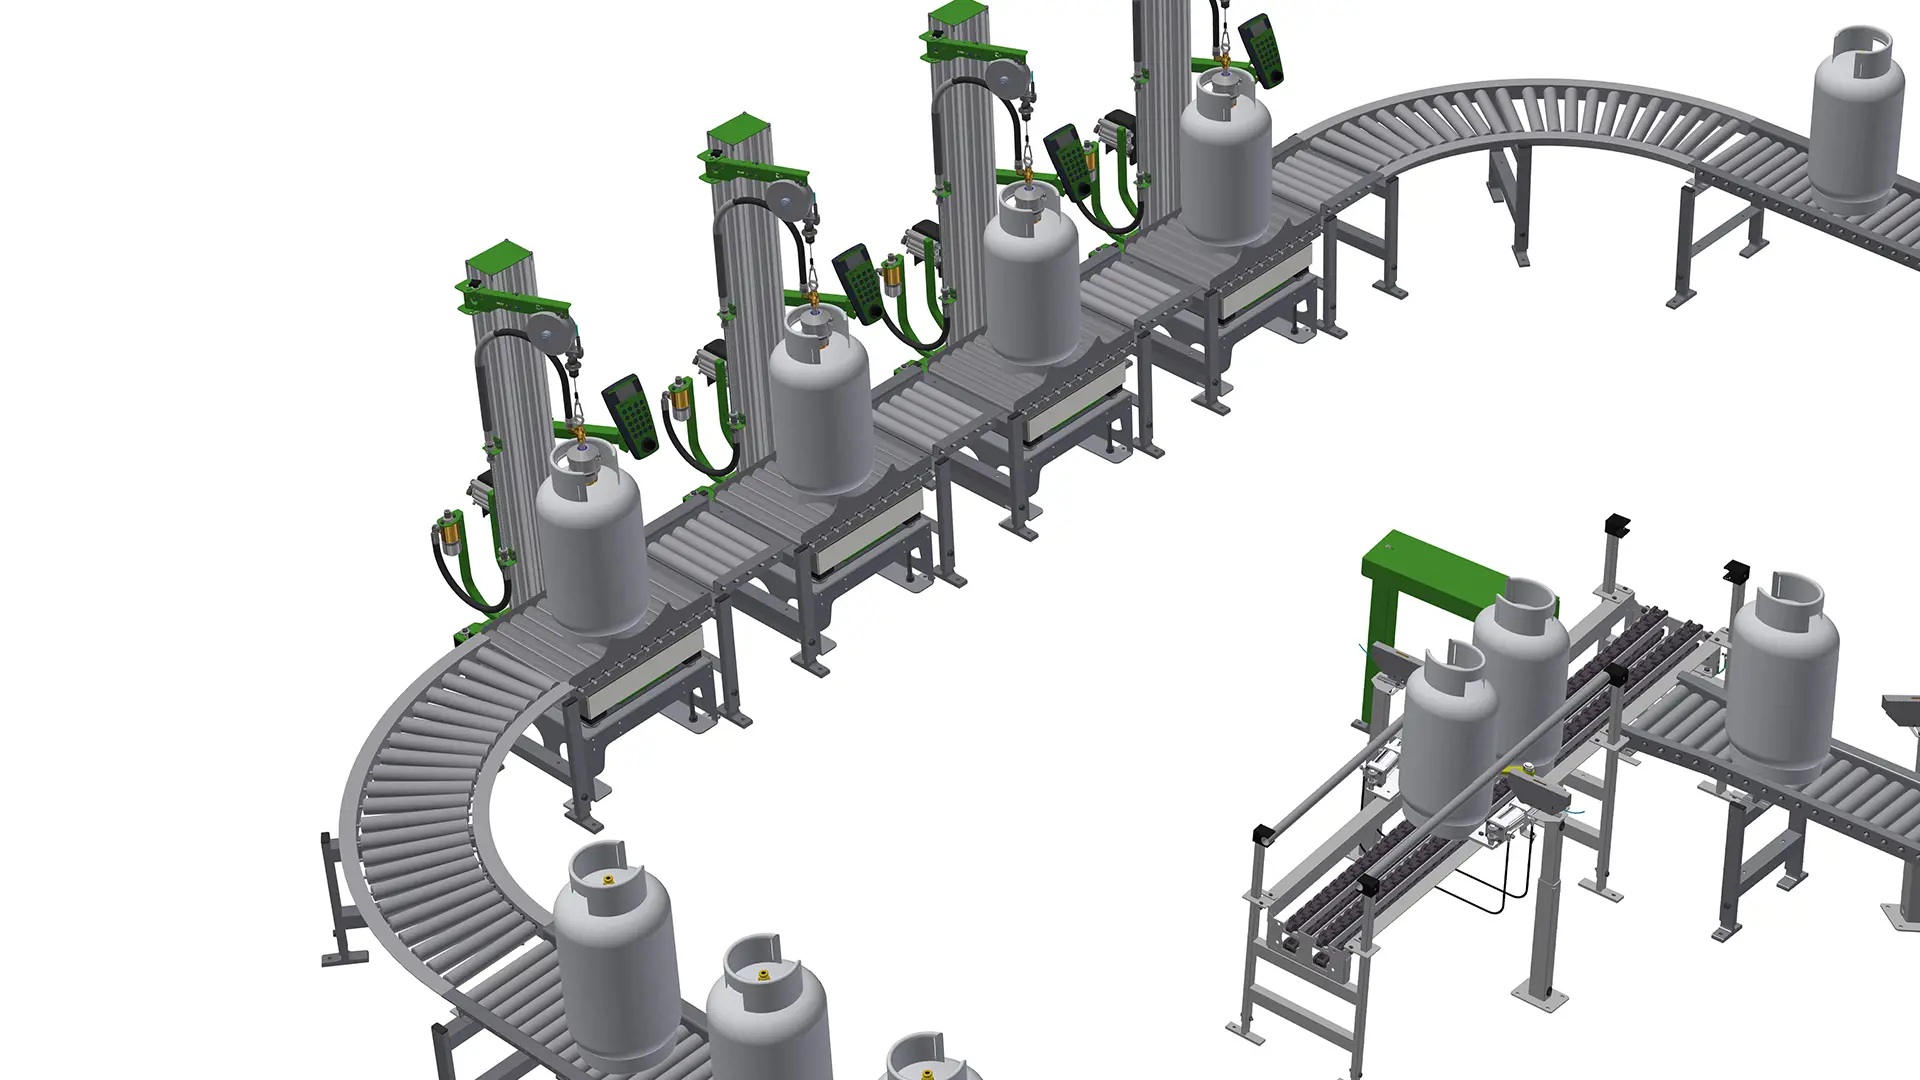 Image of roller conveyor system